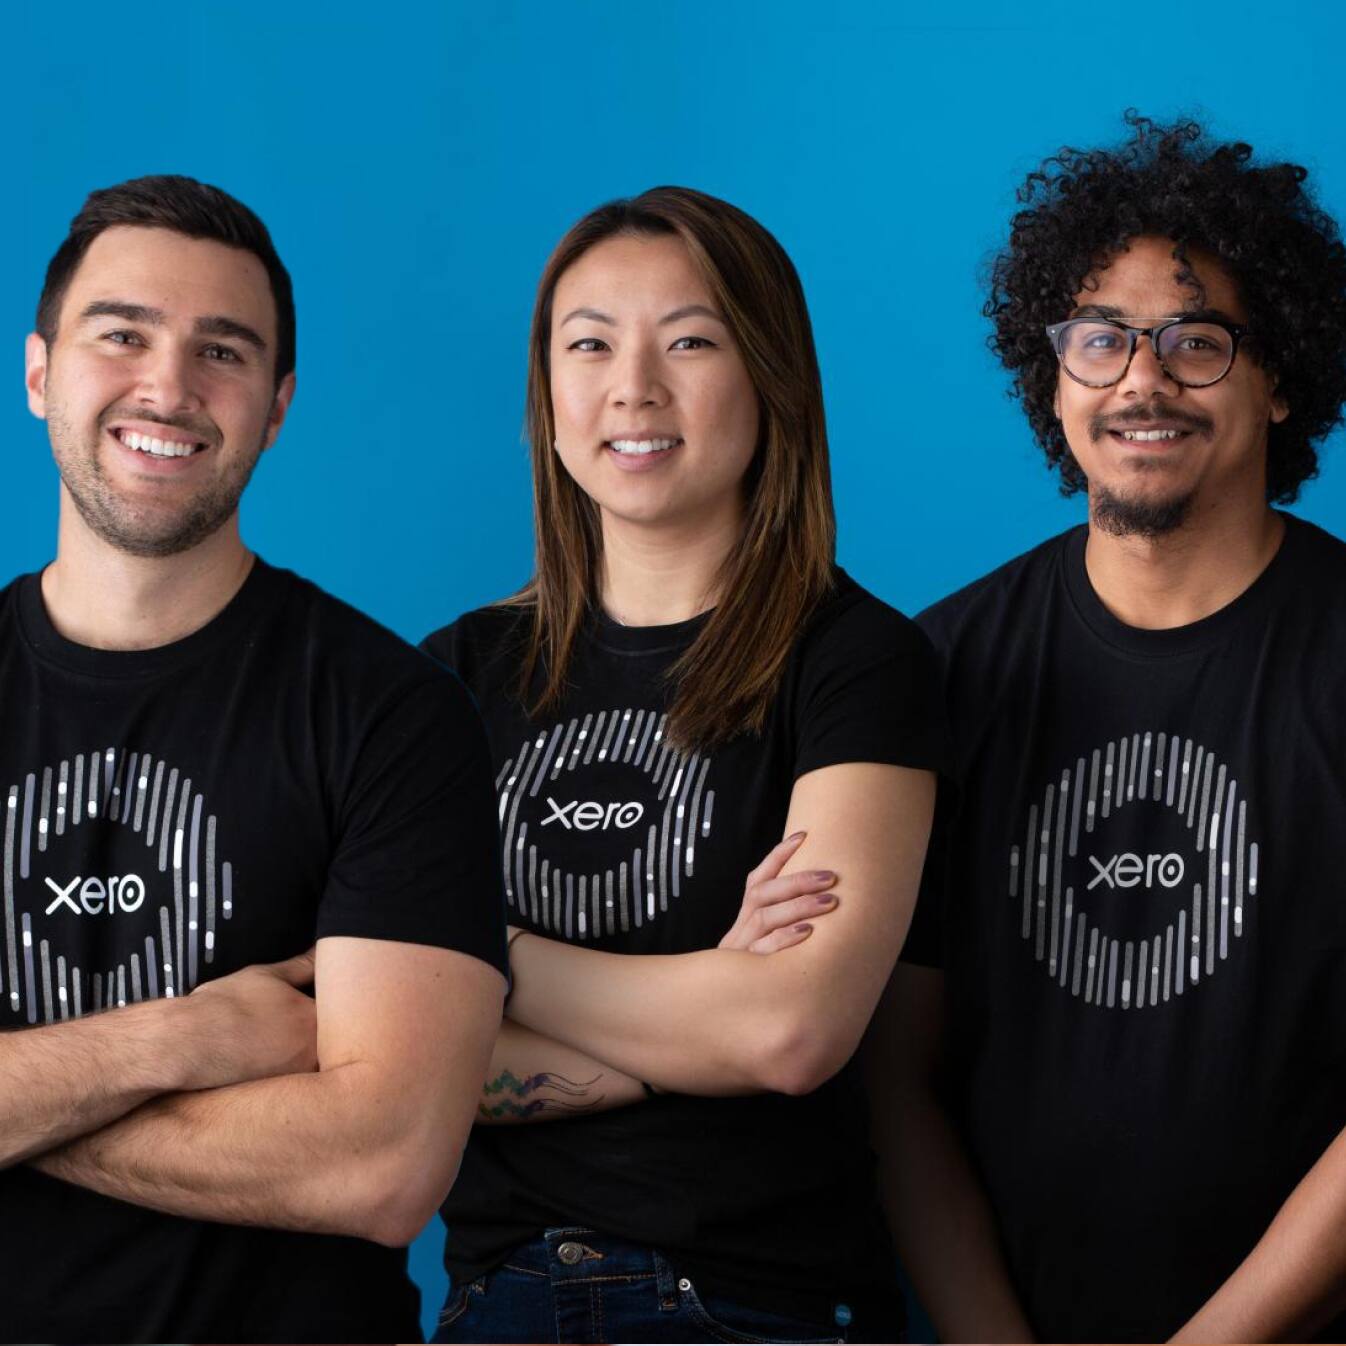 Three smiling members of the Xero team, all wearing black Xero t-shirts.